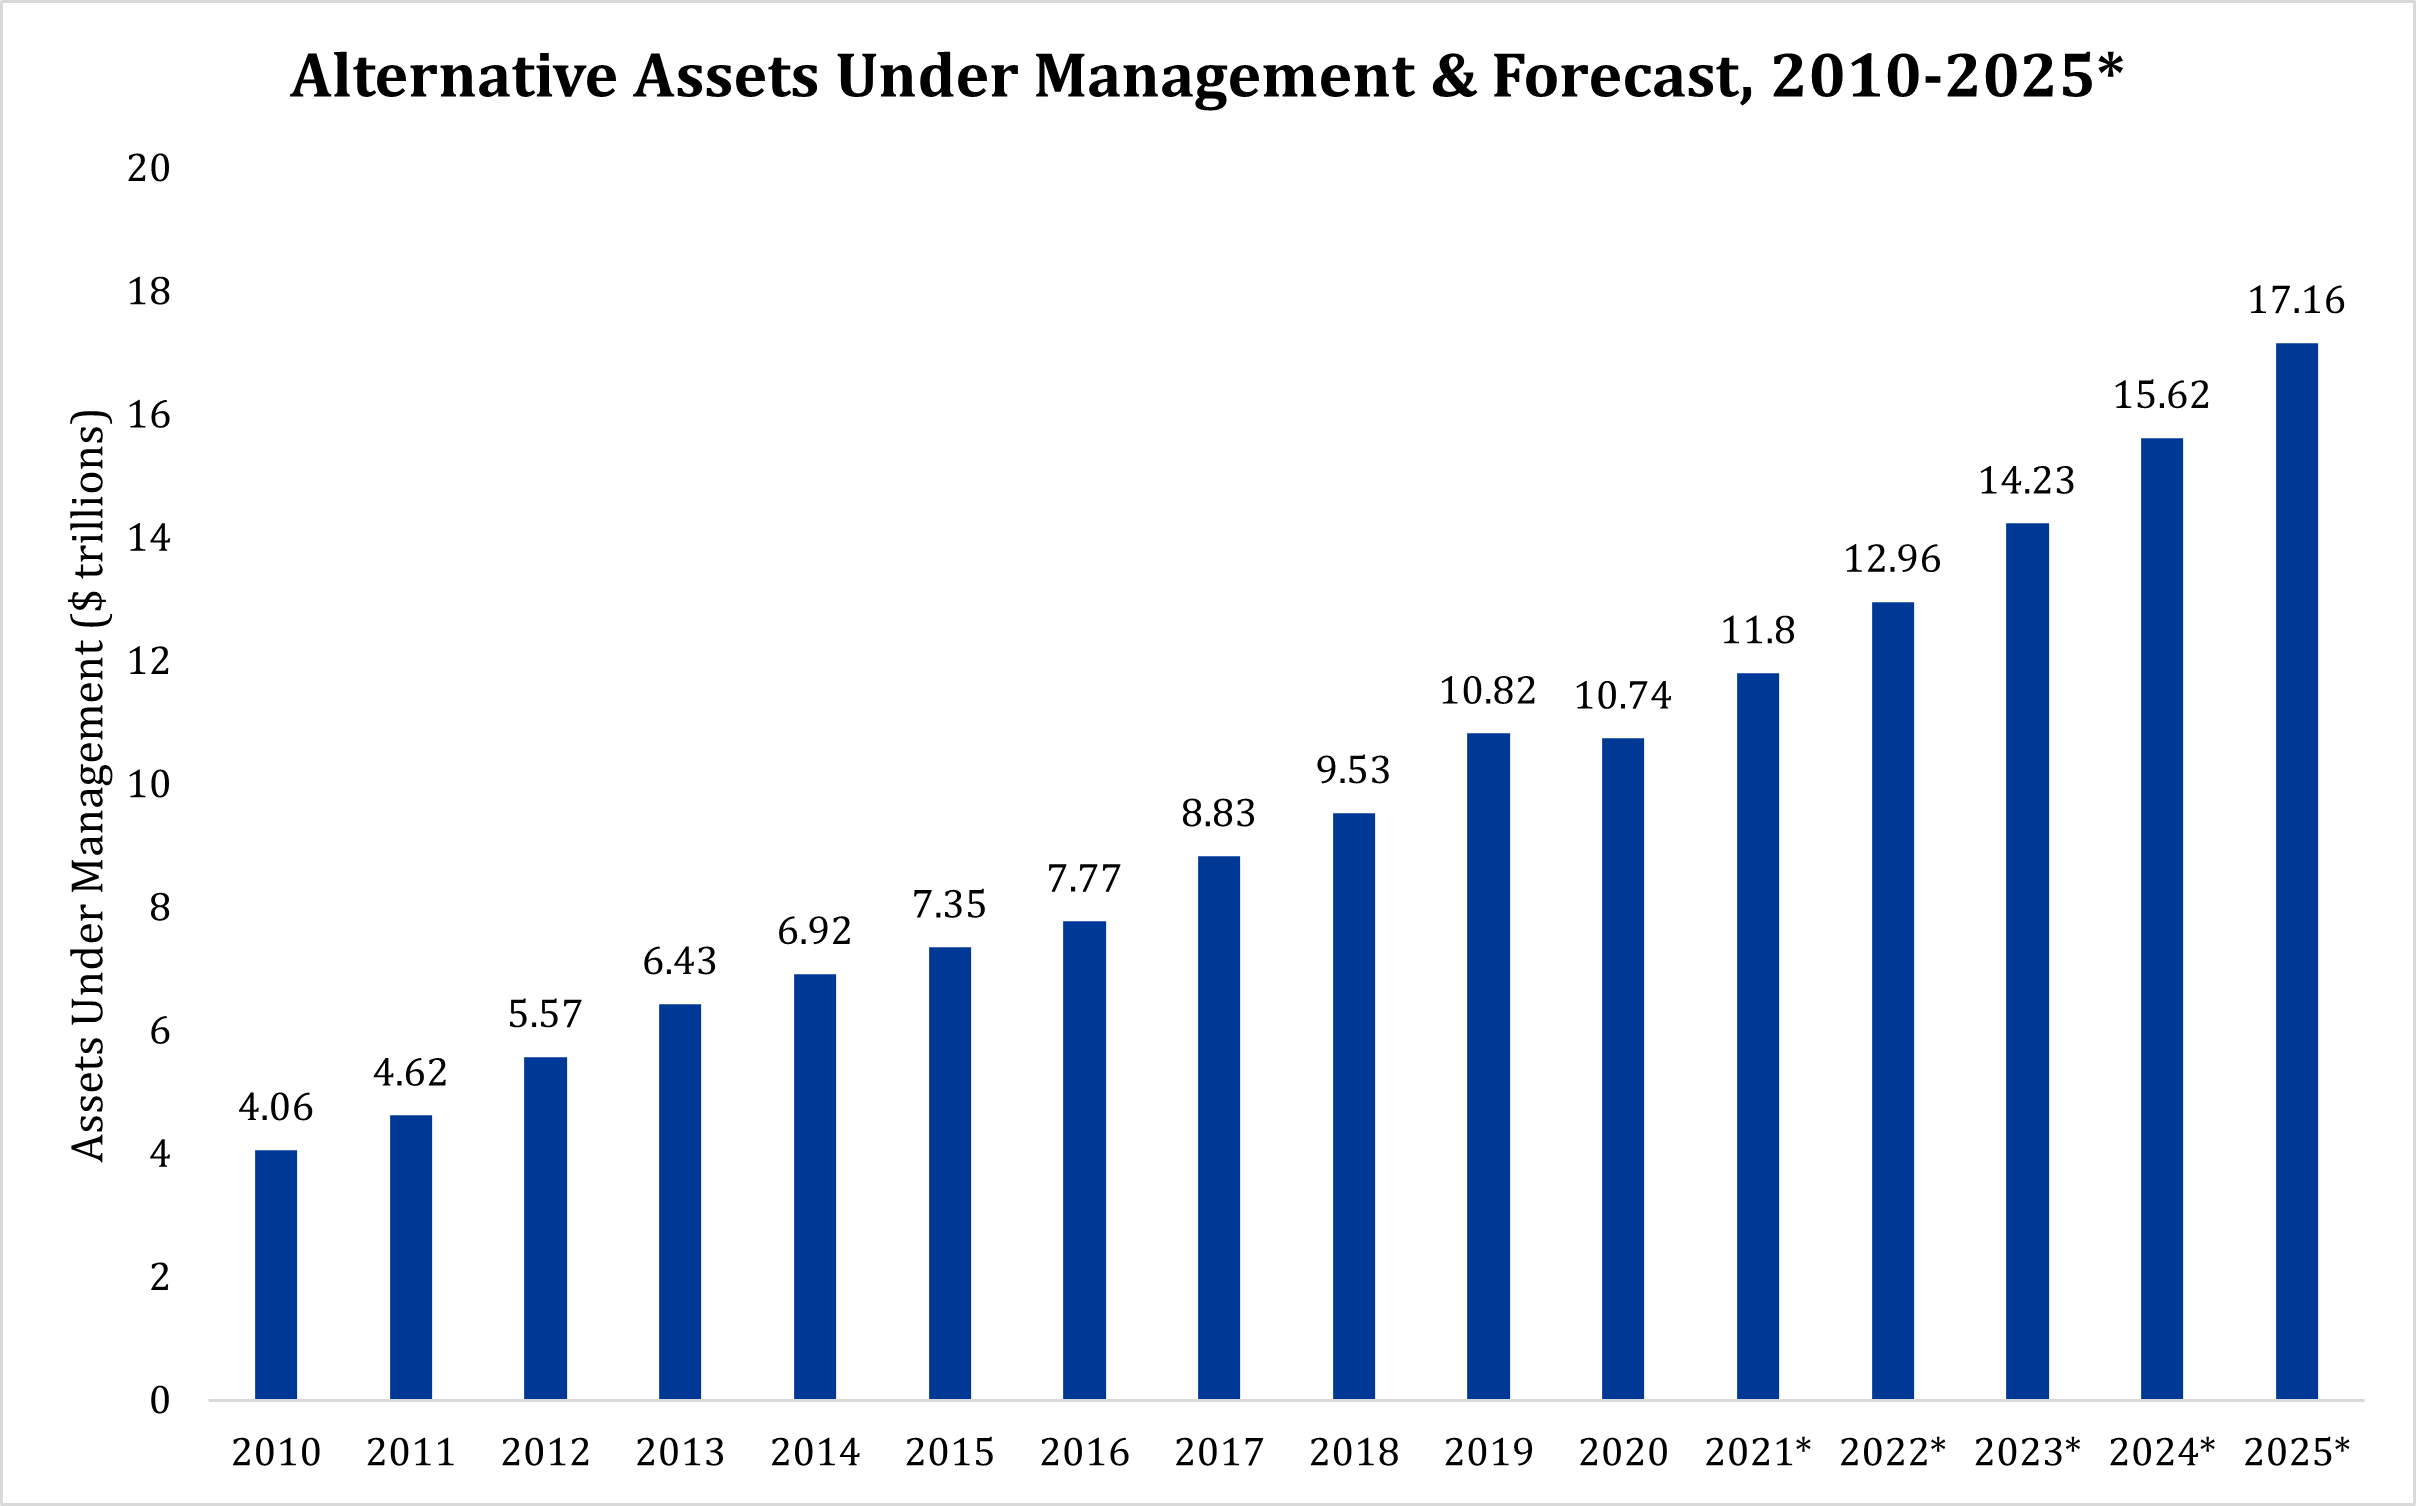 Bar graph showing alternative assets under management and forecast, 2010 - 2025.